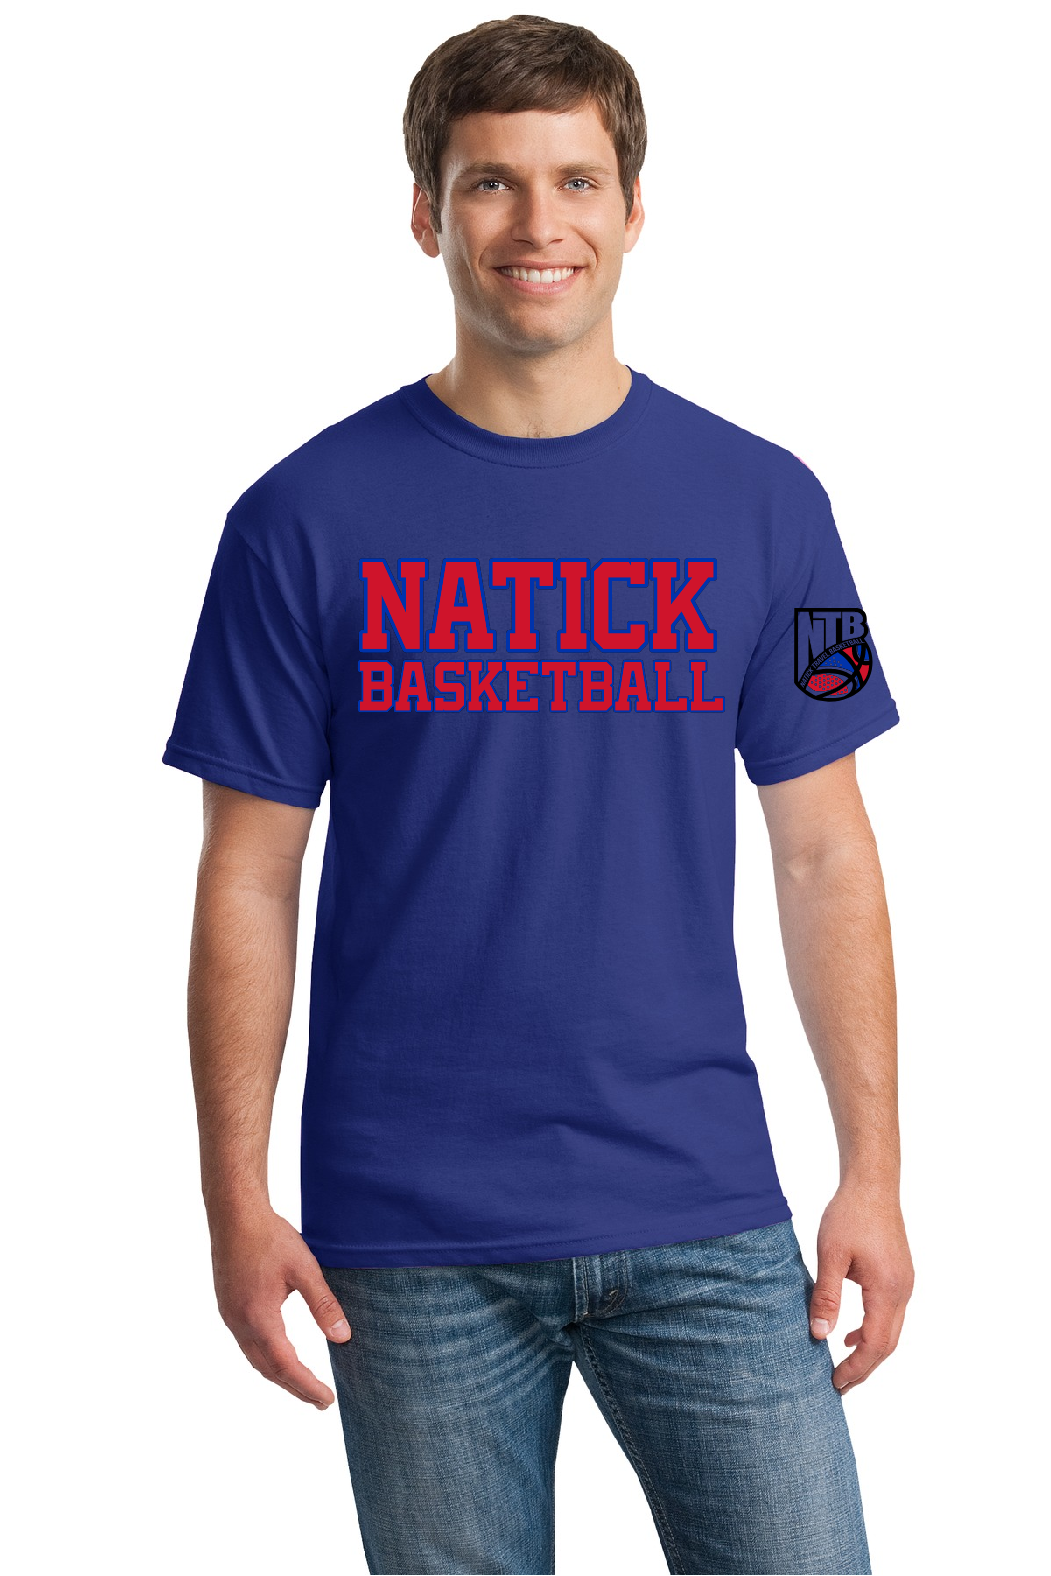 Natick Travel Basketball Cotton Short sleeve Tee